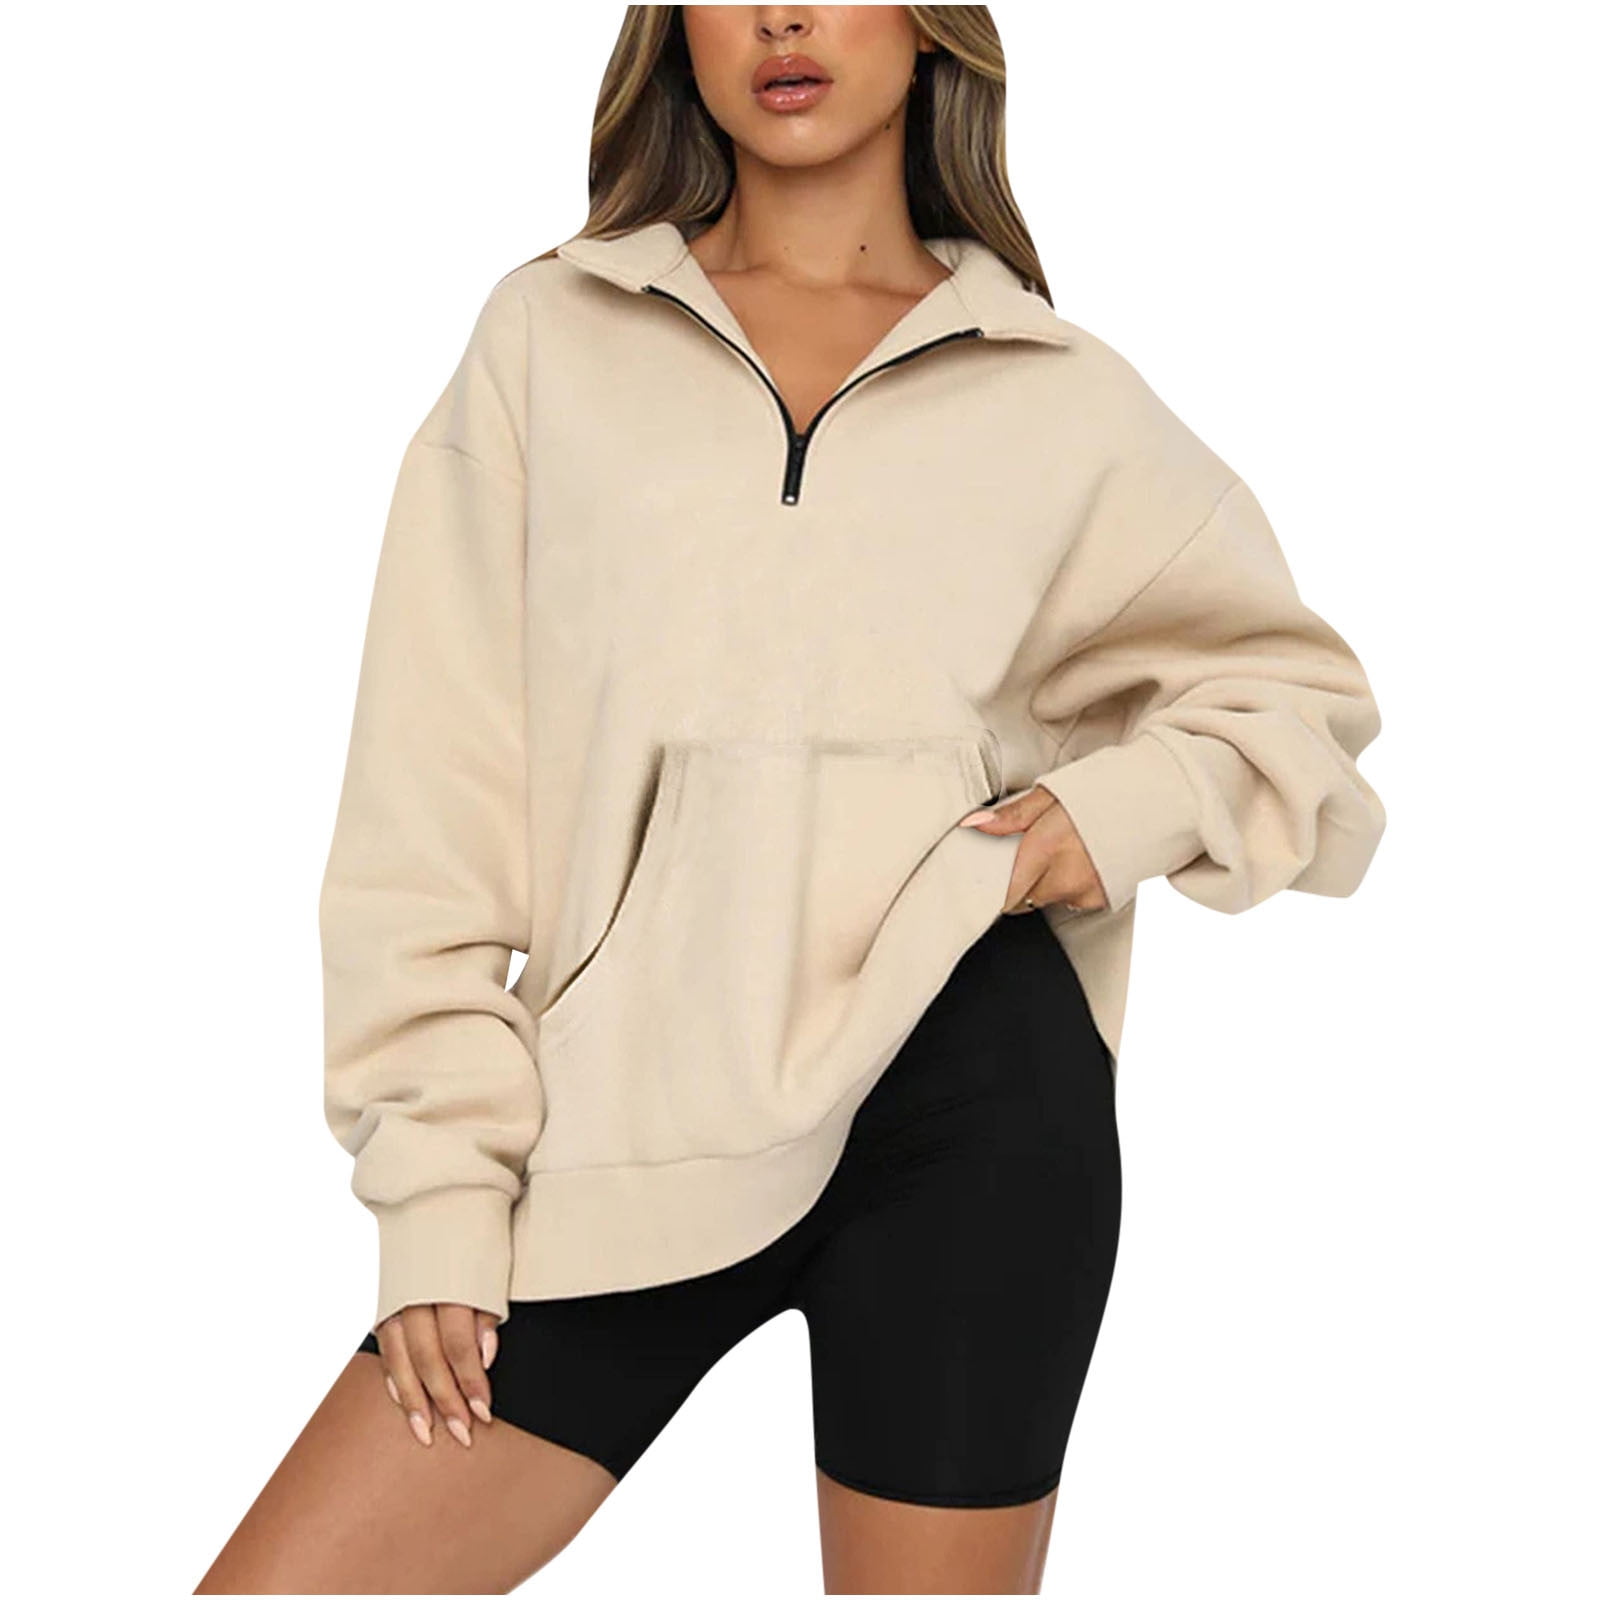 Plus Size Hoodies for Women Fall Basic Shirt Sweatshirt with Hood